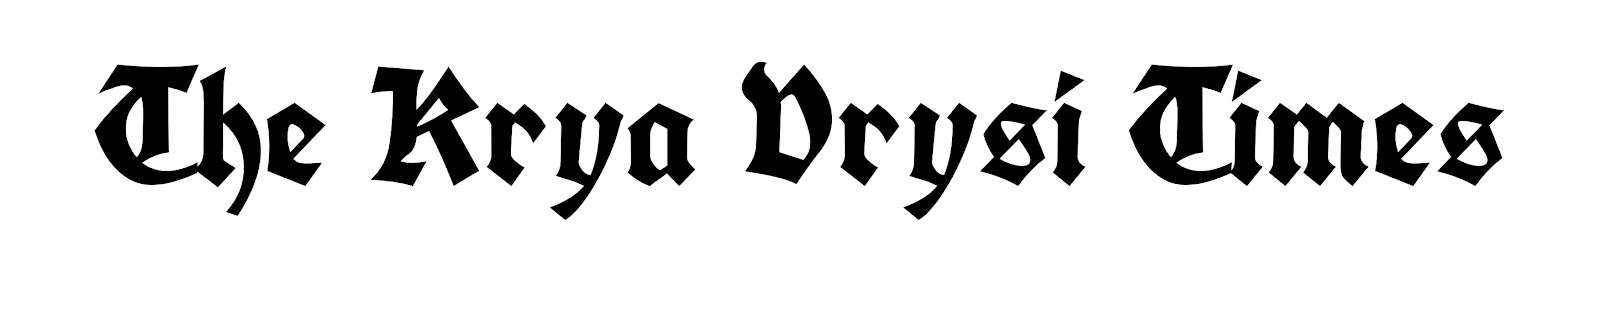 The Krya Vrysi Times